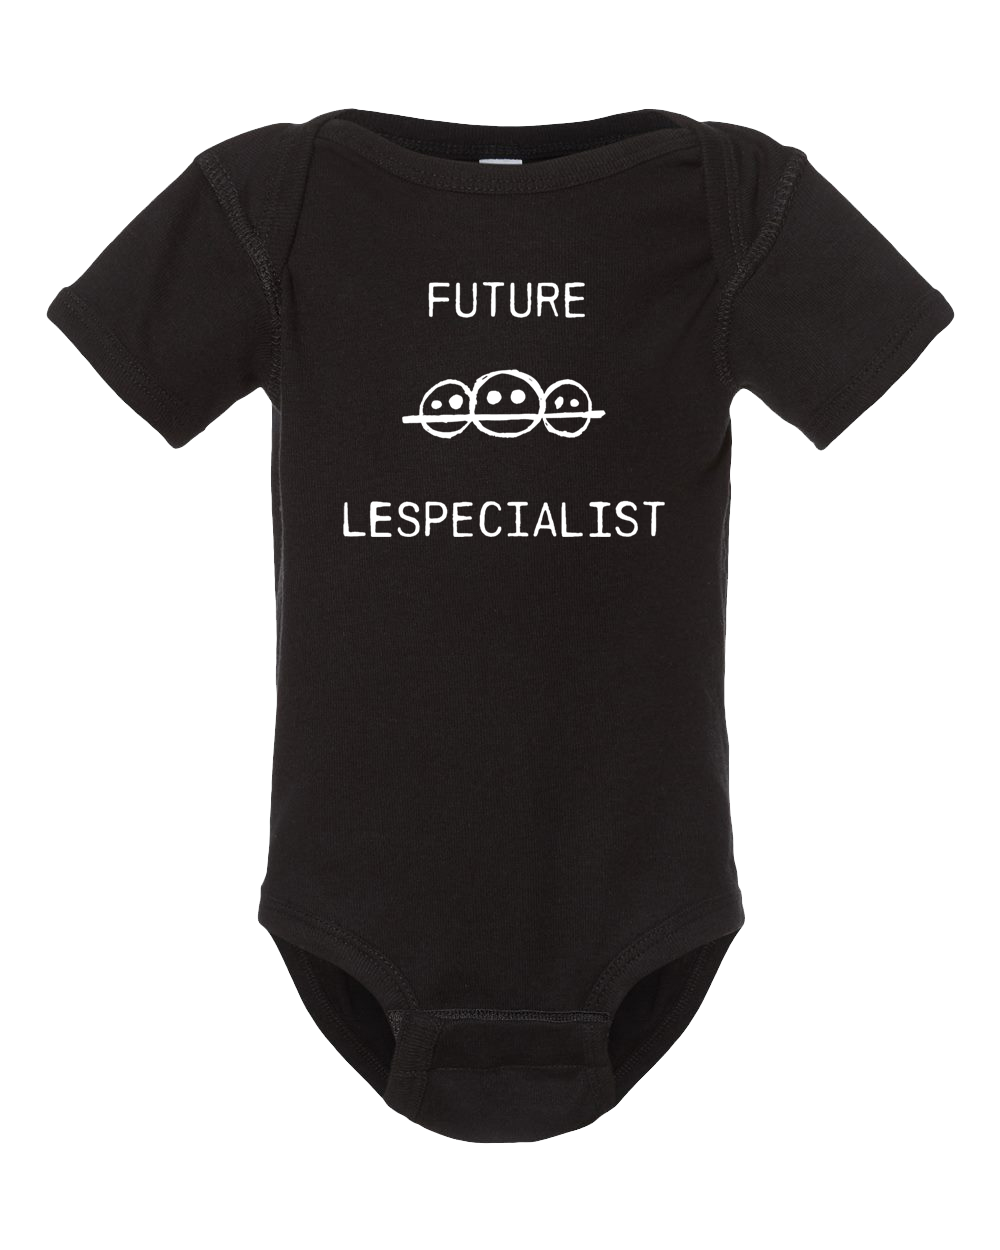 Future lespecialist - Baby Onesie